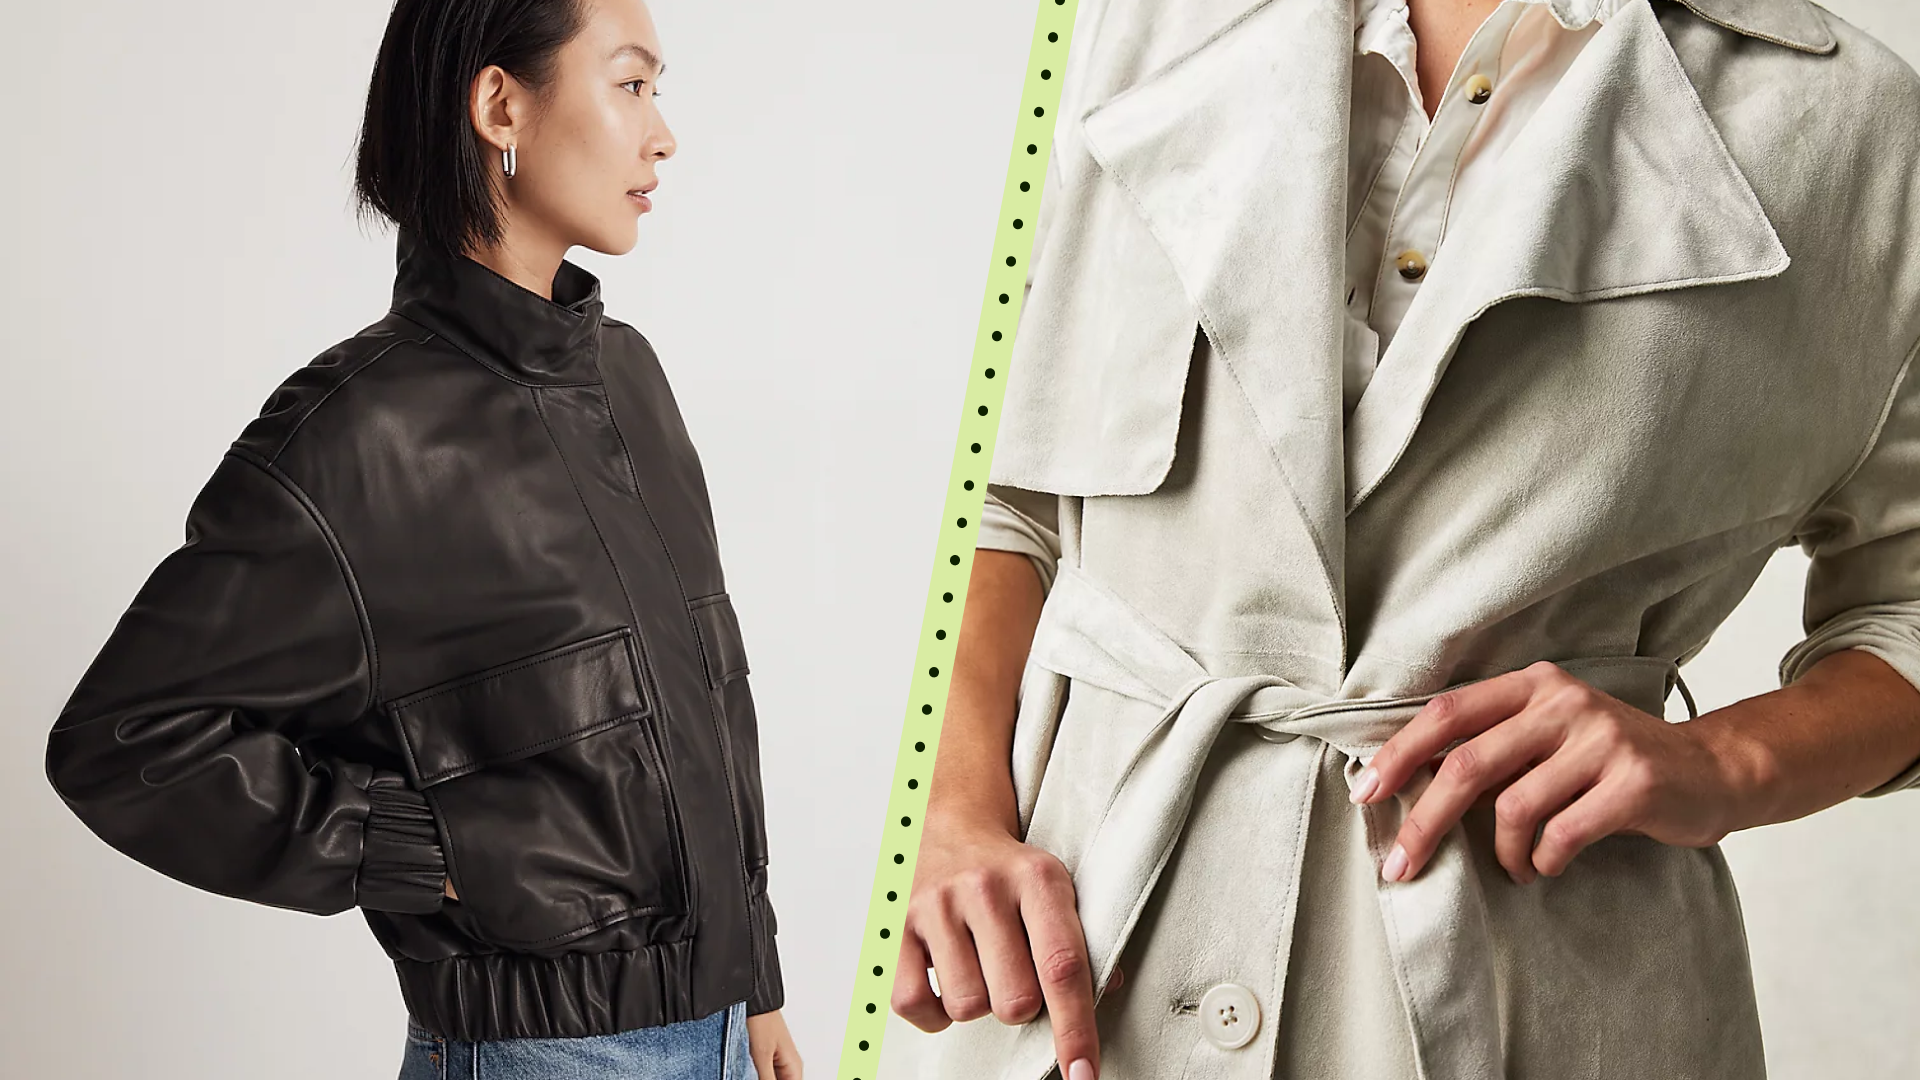 Women's Leather Jackets & Coats